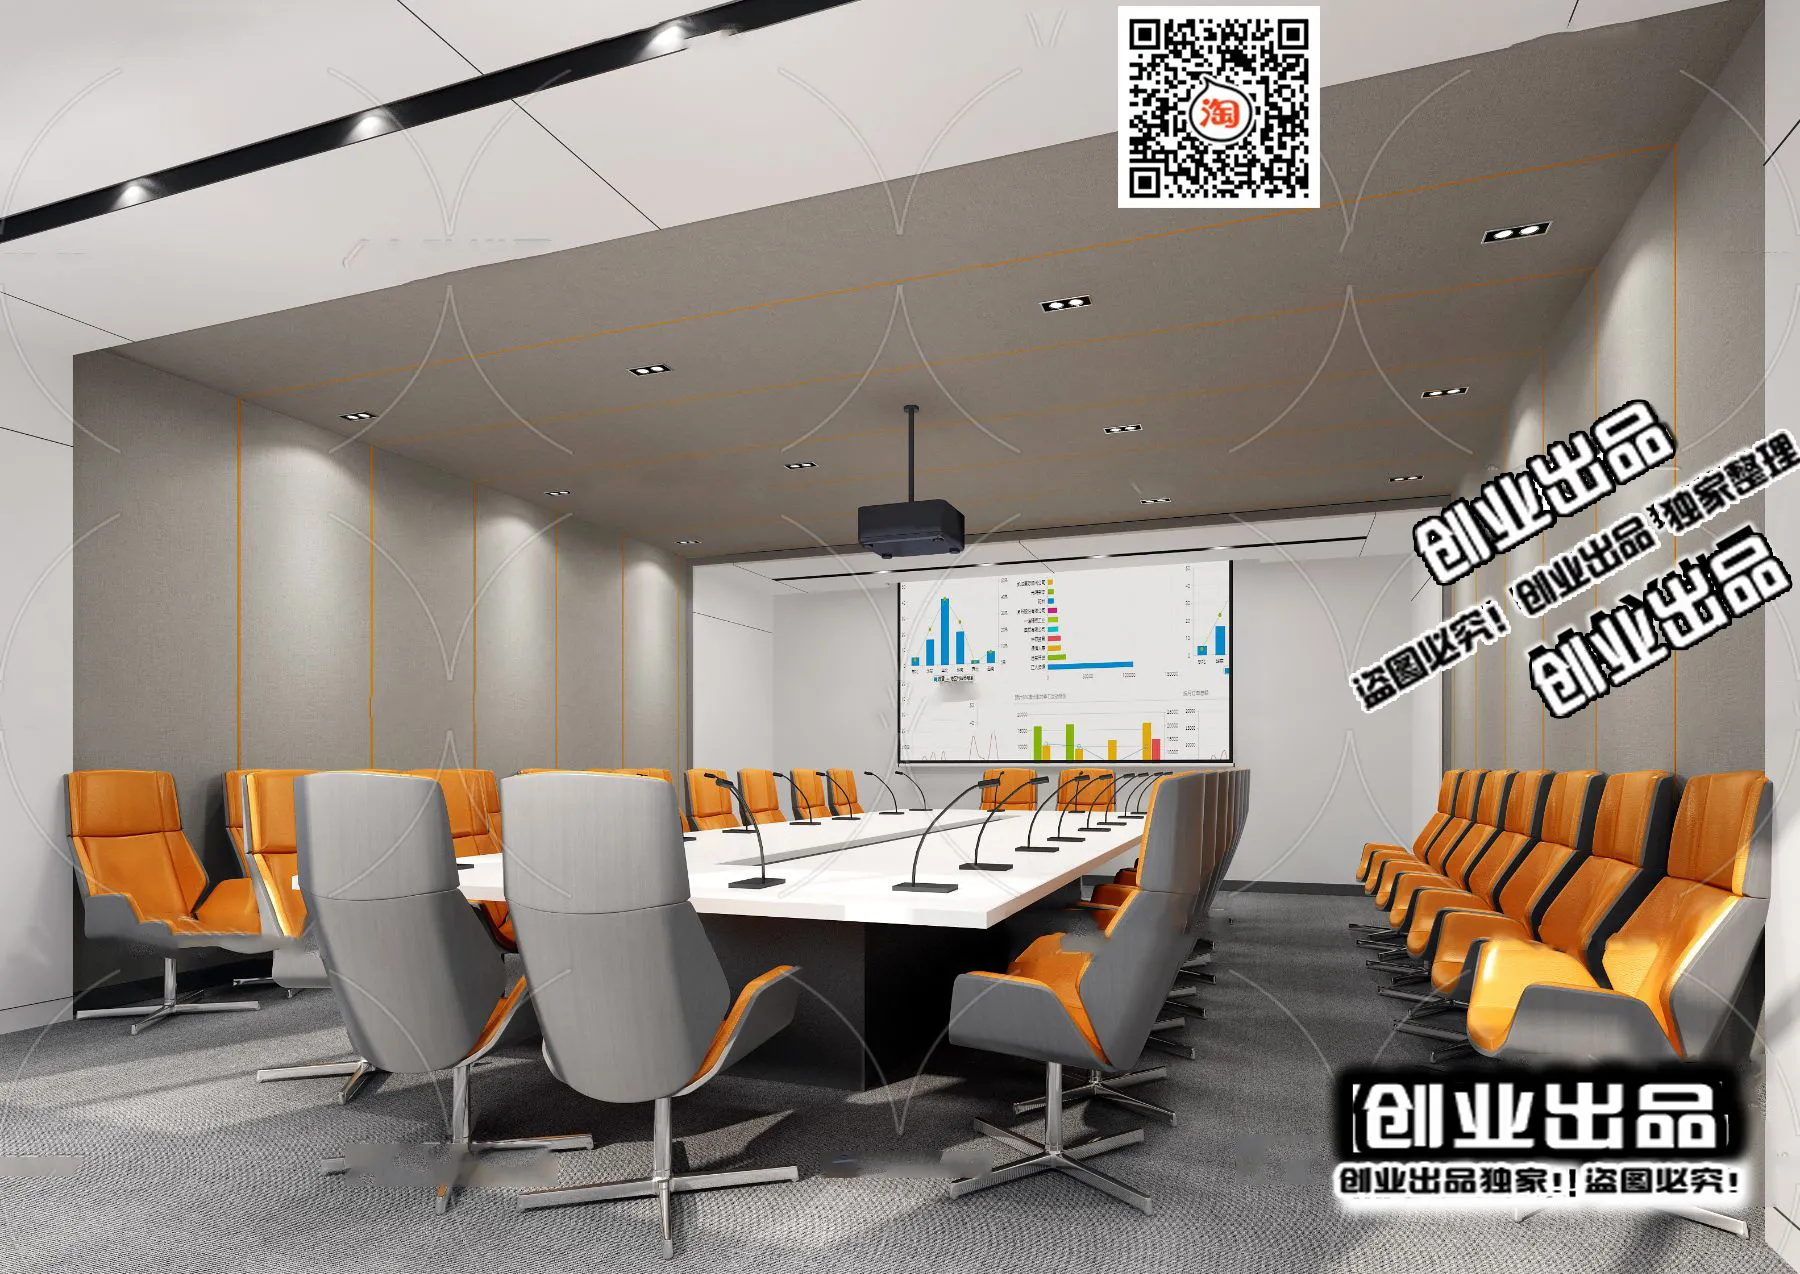 3D OFFICE INTERIOR (VRAY) – MEETING ROOM 3D SCENES – 042